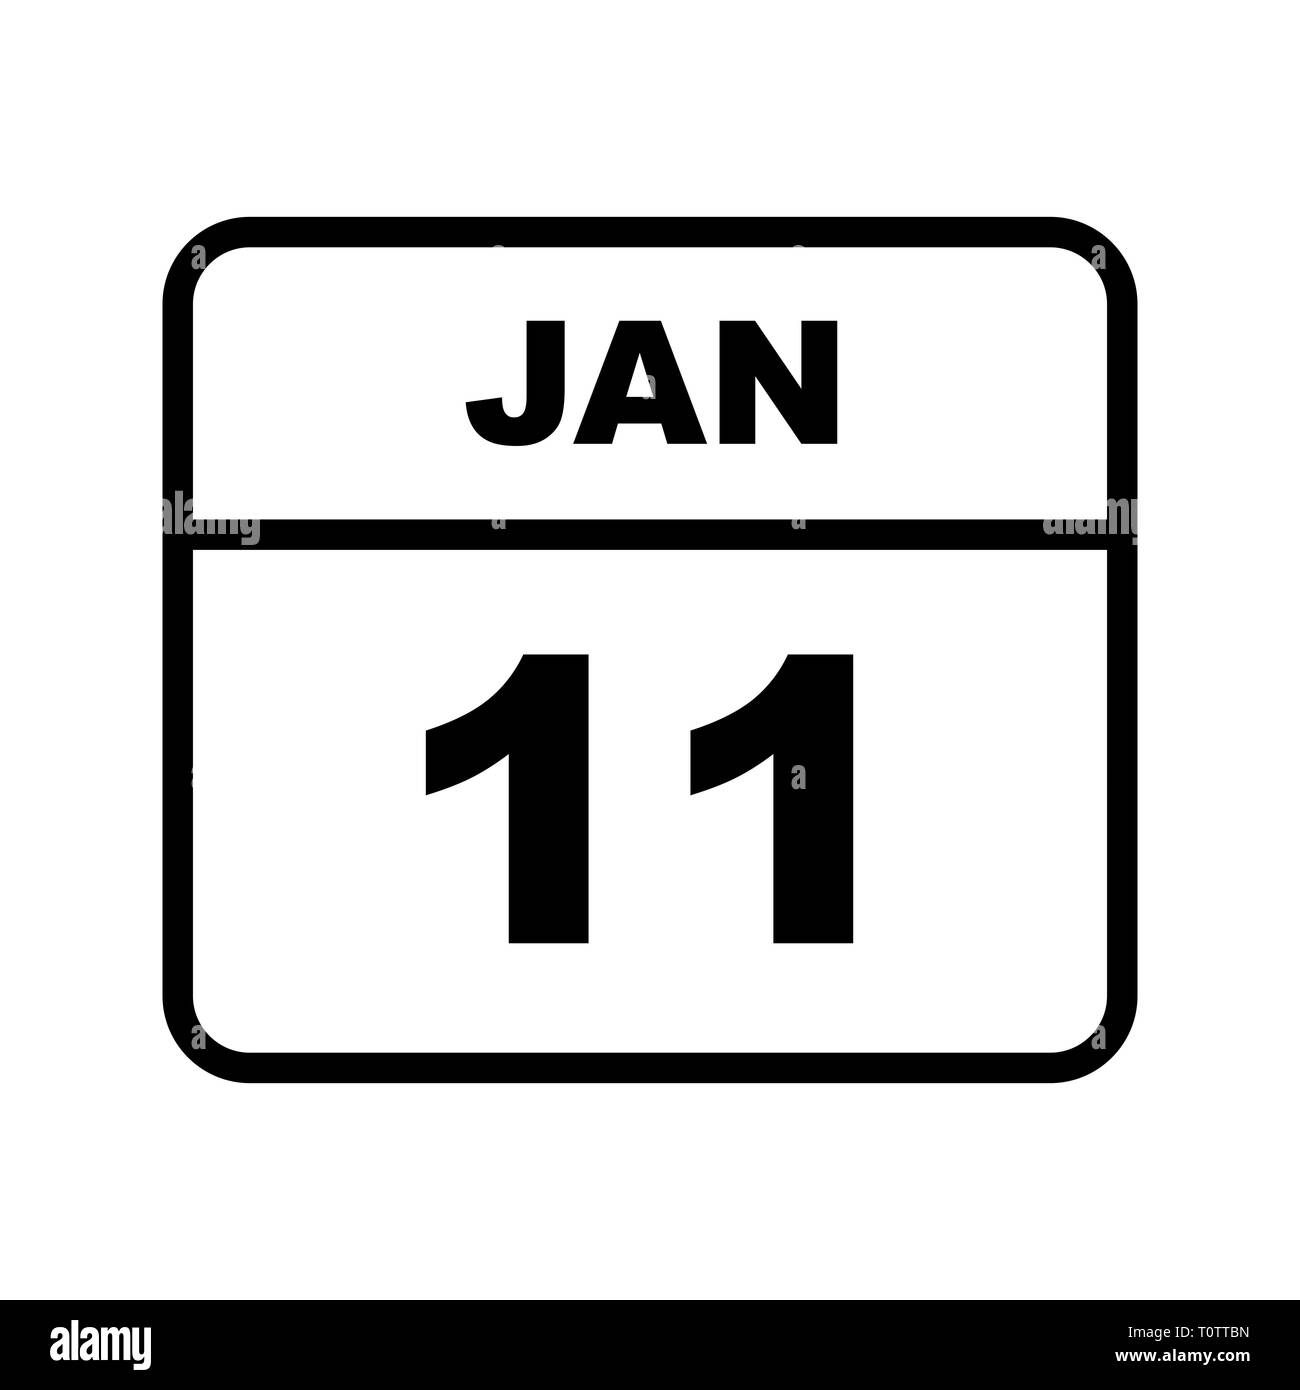 January 11th Date on a Single Day Calendar Stock Photo Alamy